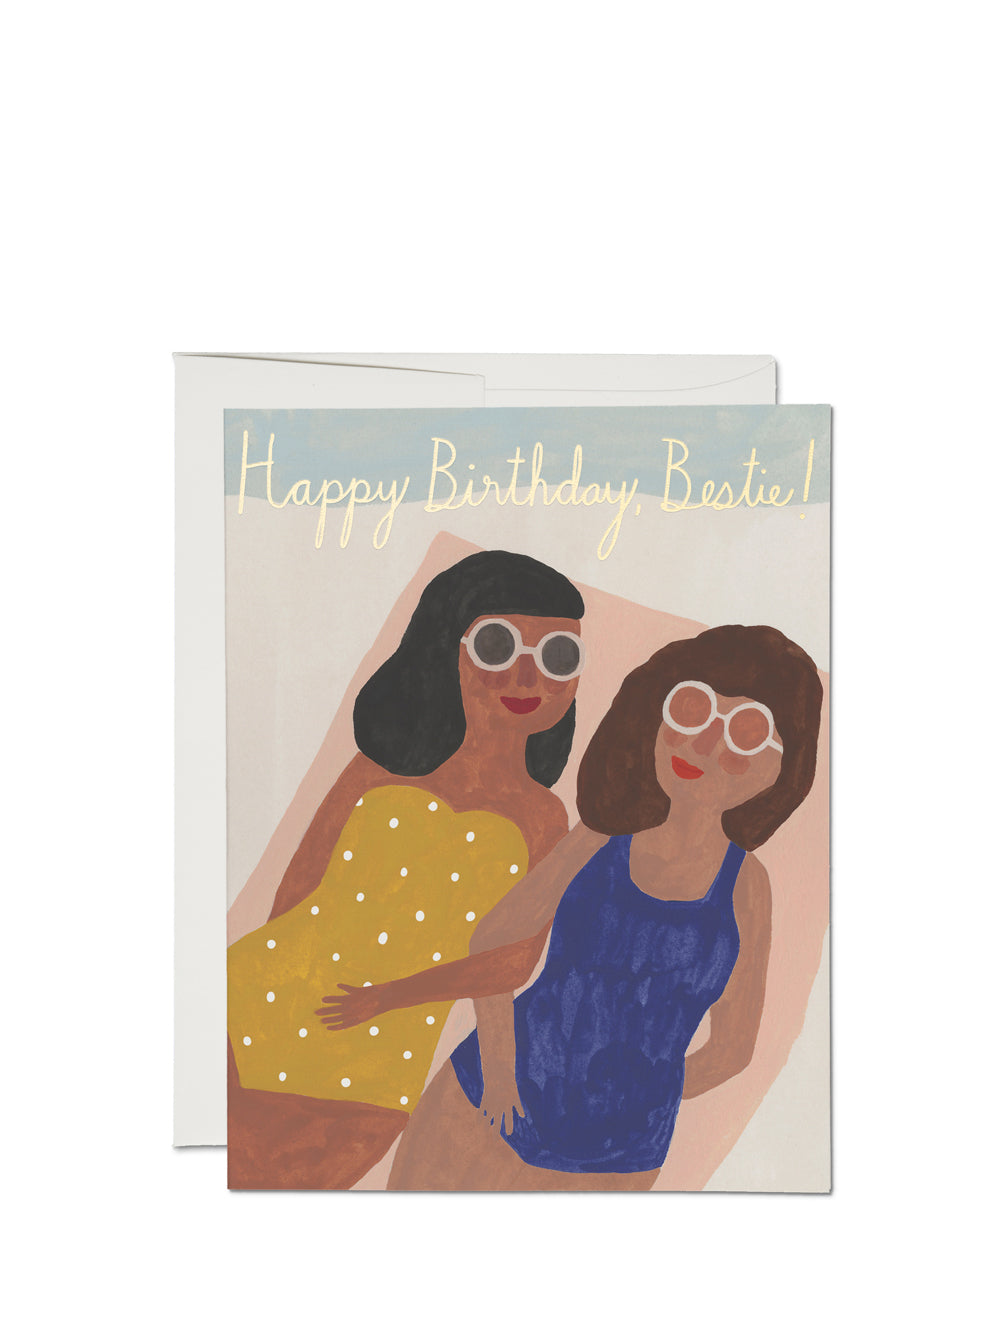 Happy Birthday Bestie Birthday Card